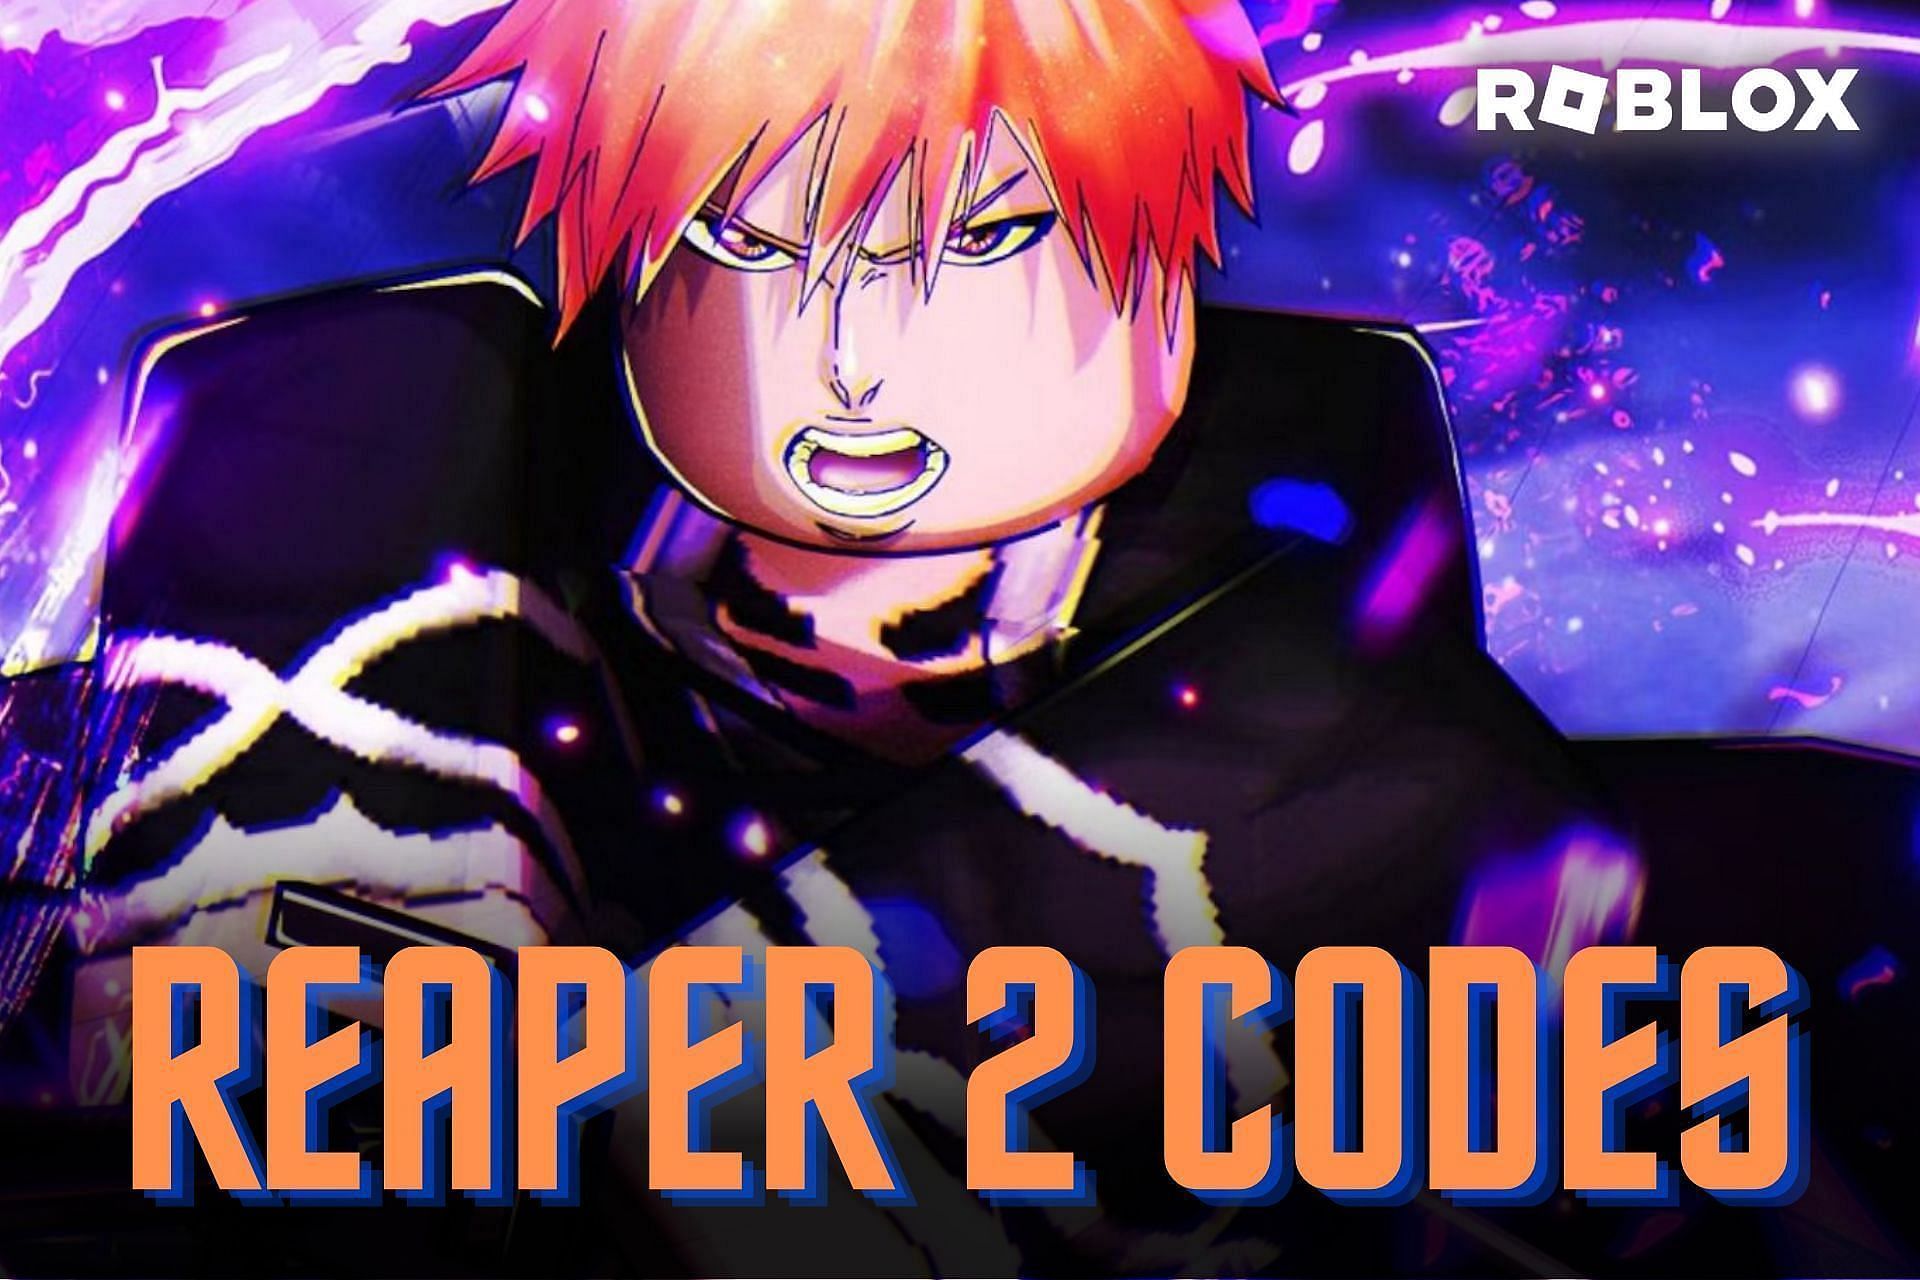 Featured image of Reaper 2 codes (Image via Sportskeeda)